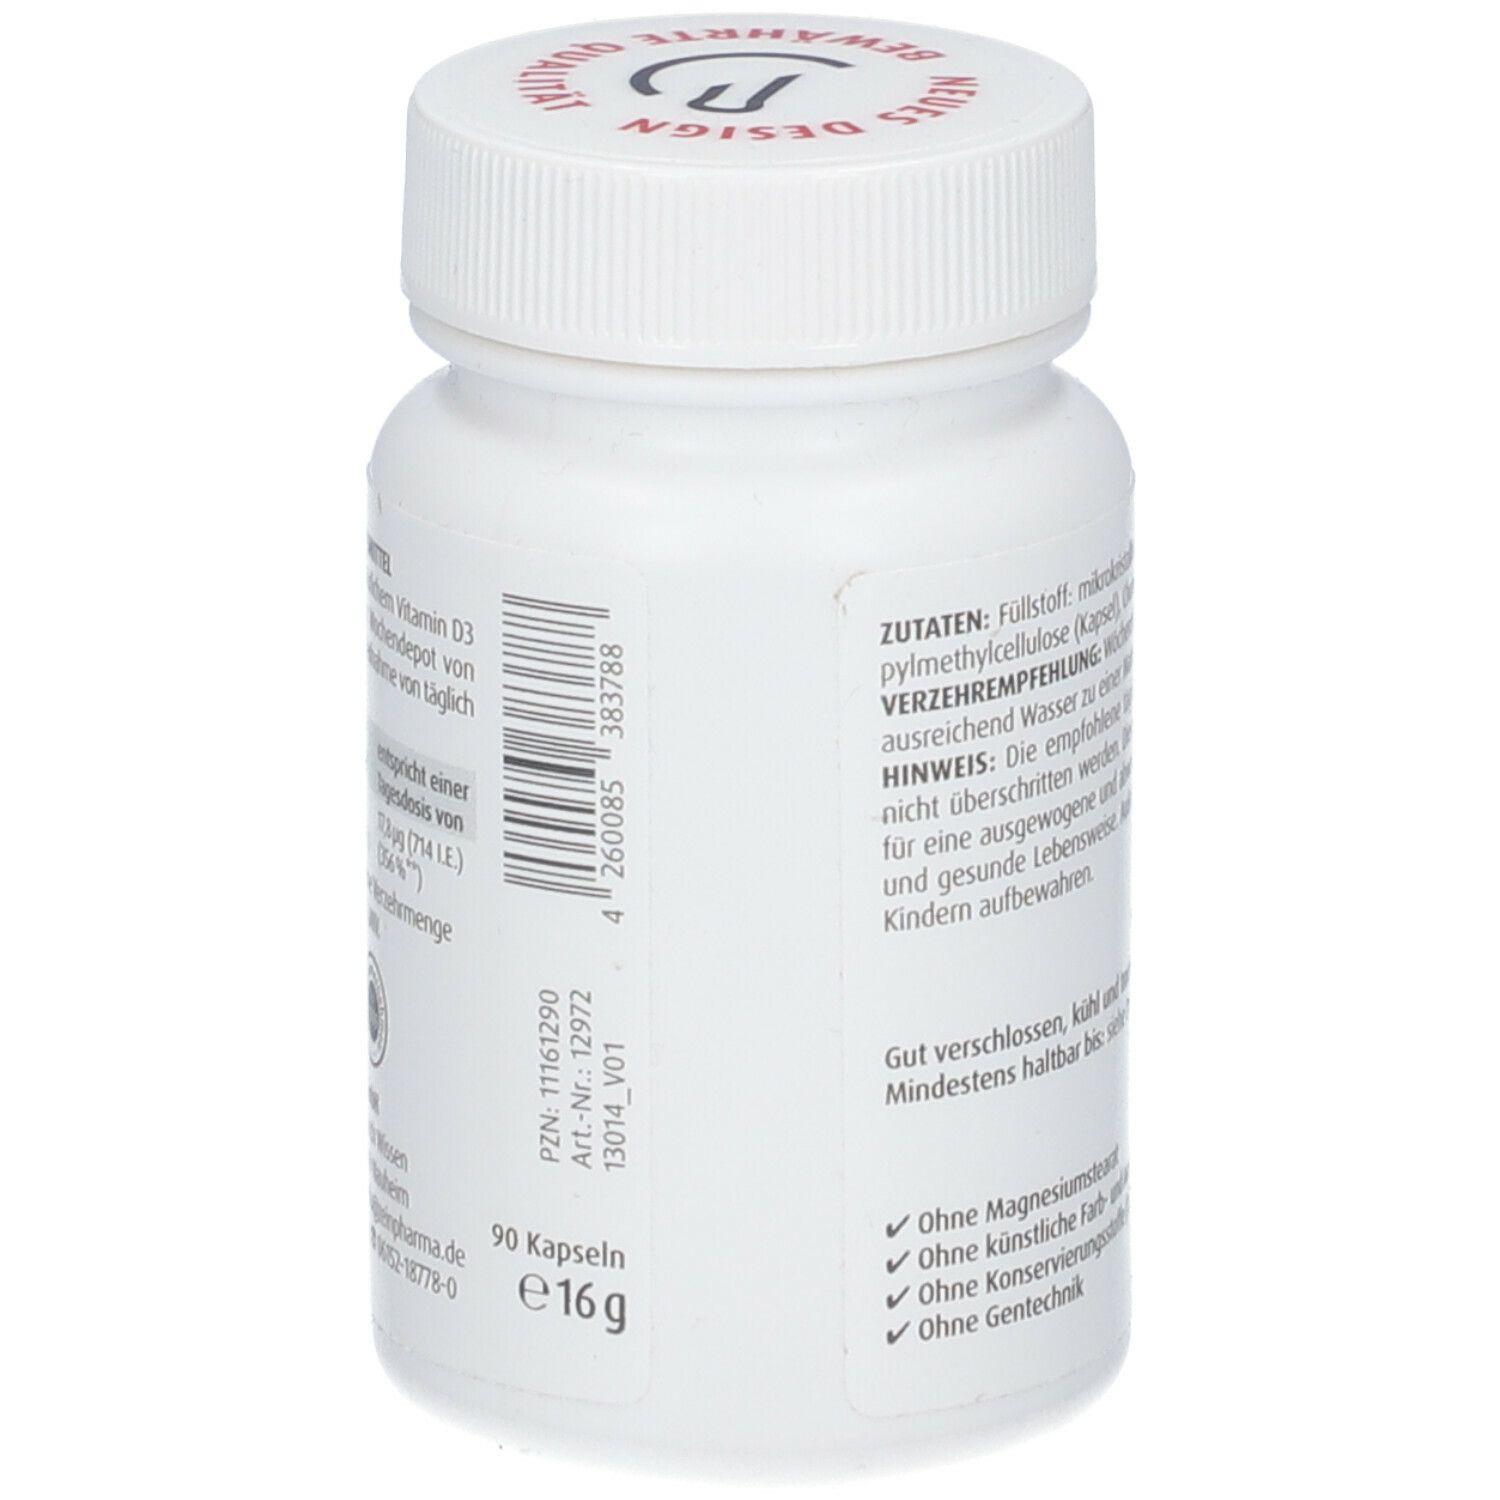 ZeinPharma® Vitamin D3 Kapseln 5000 I.E.